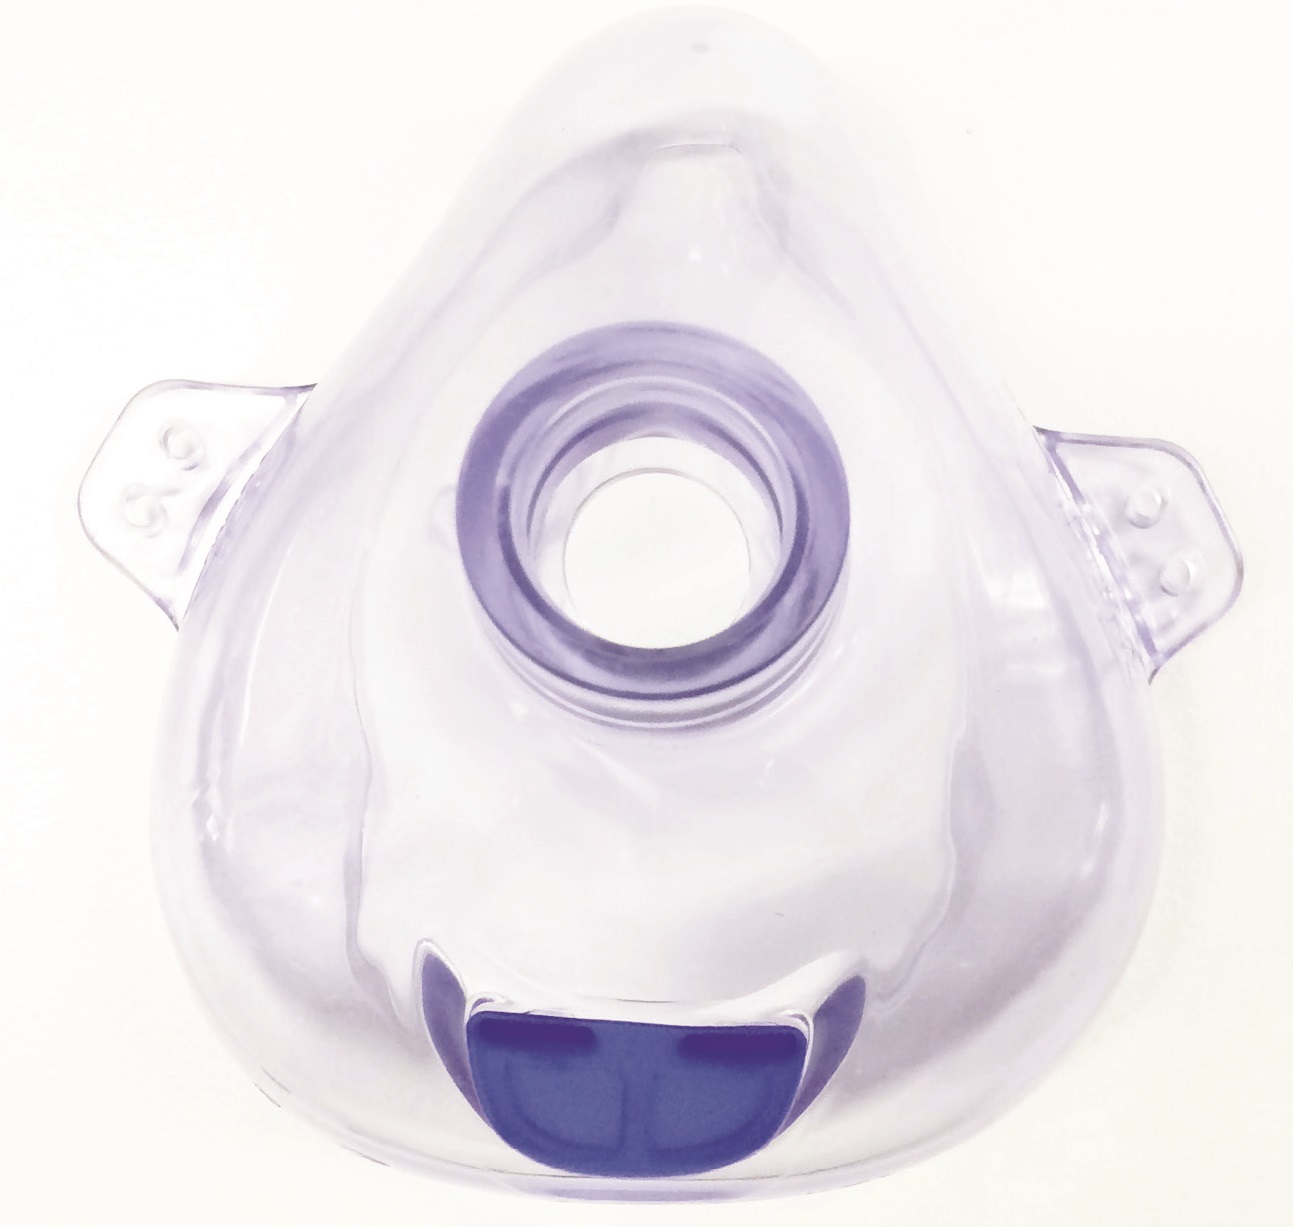 Breathe Eazy Spacer Mask - Adult Age 6+